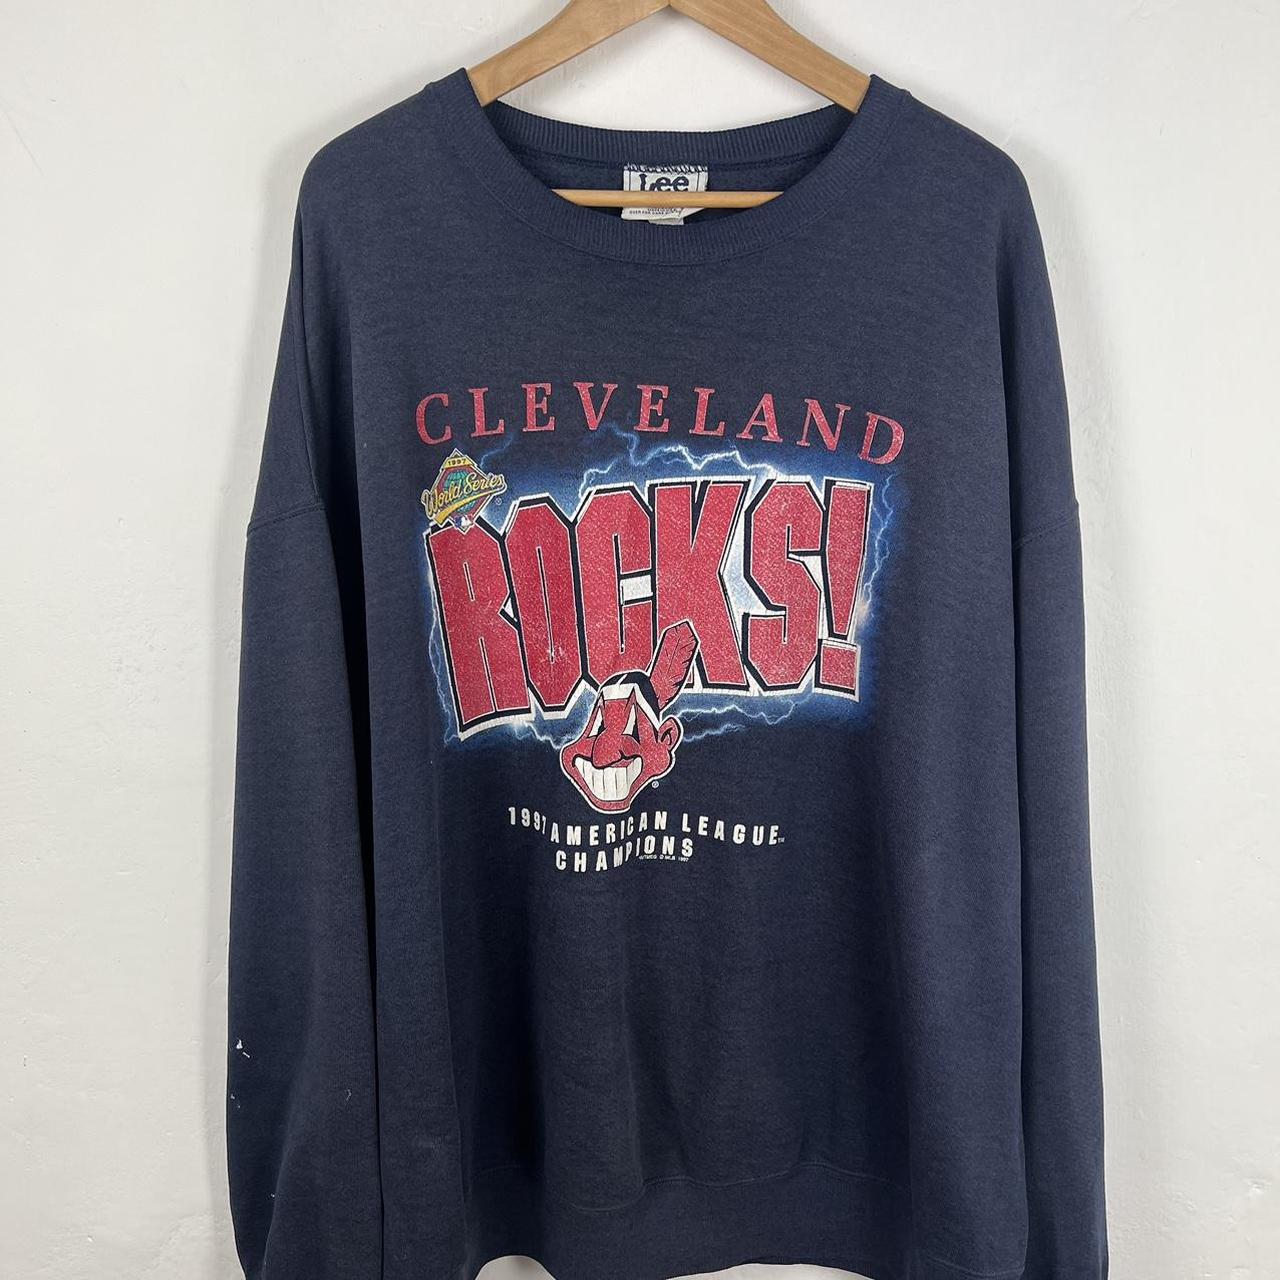 Lee sport Cleveland rocks sweatshirt XL